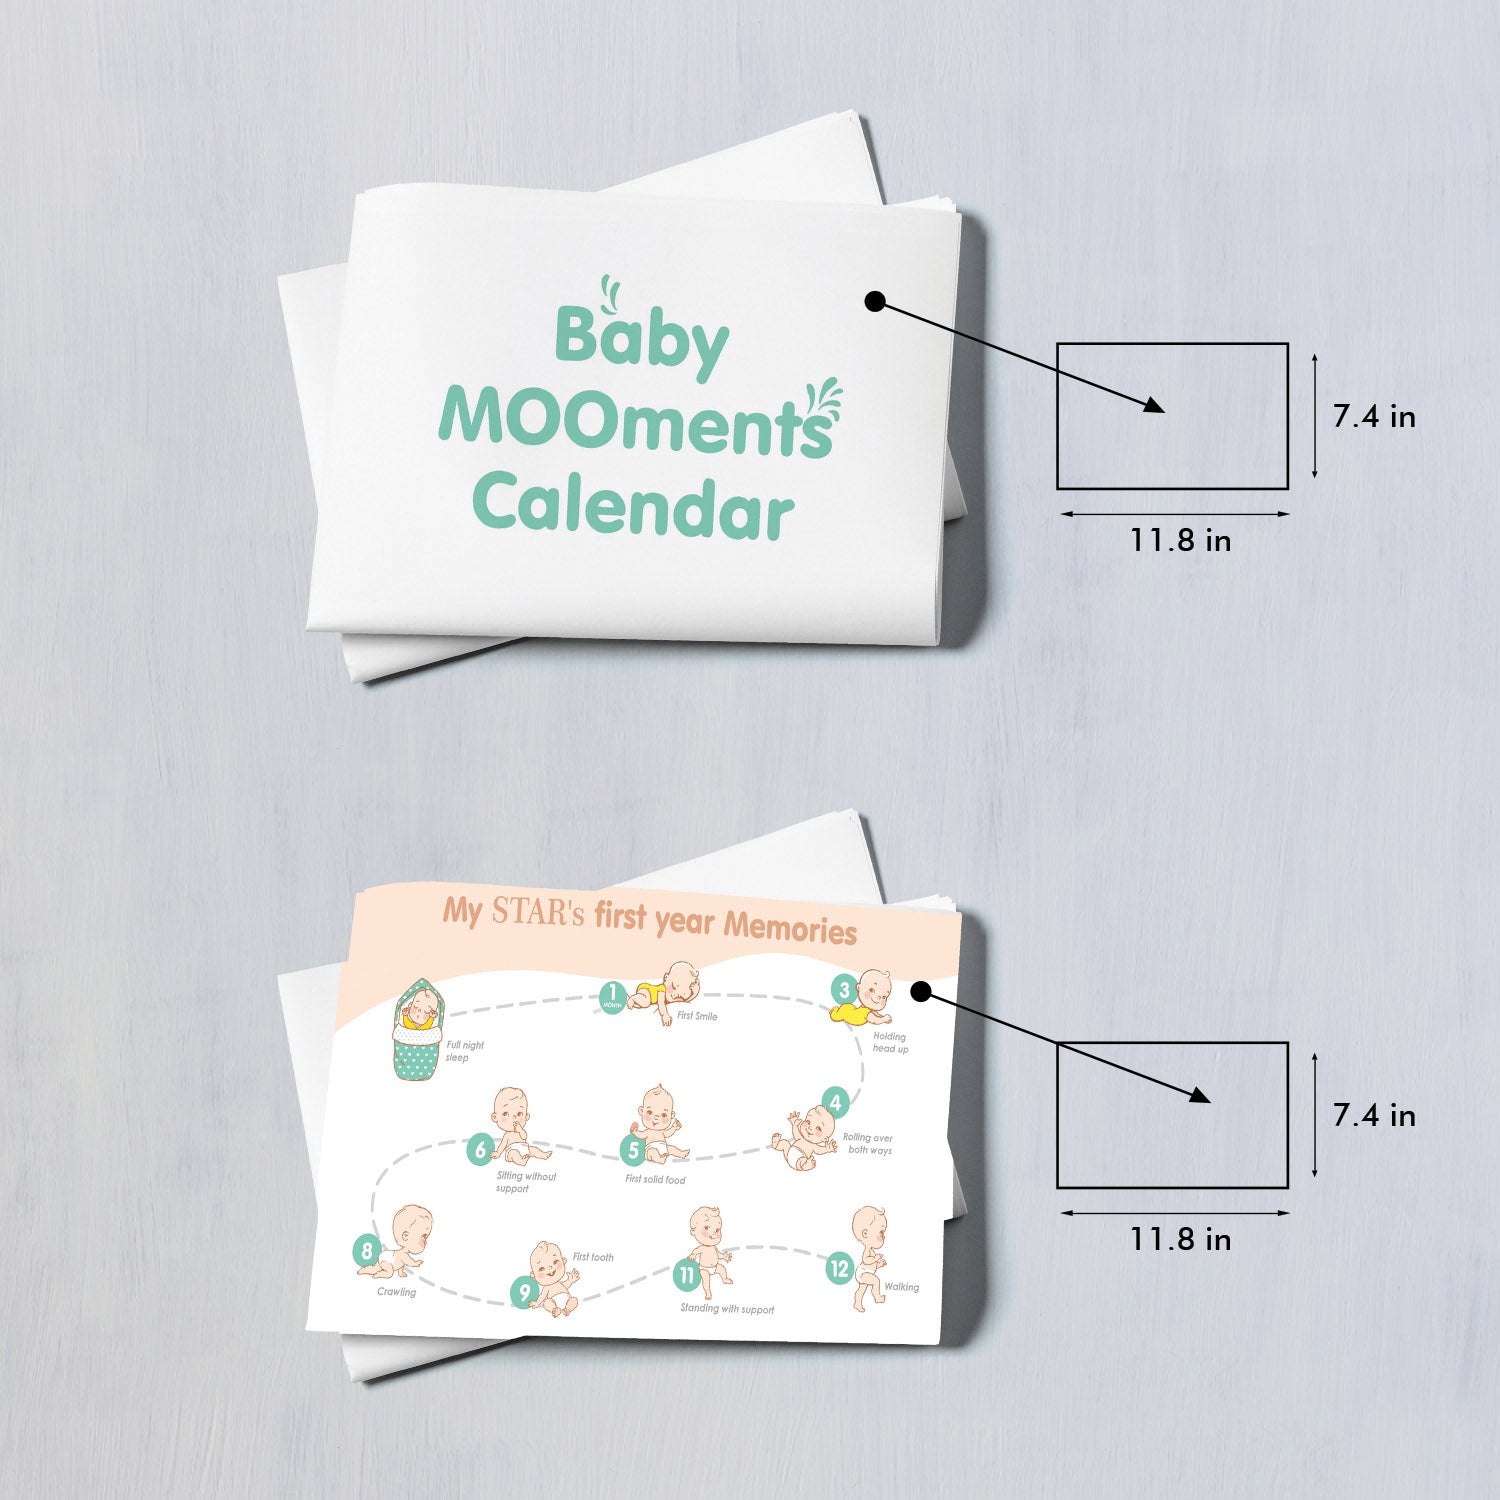 Baby MooMents Calendar - Record Baby Milestones - Nursery Decor - Baby Moo